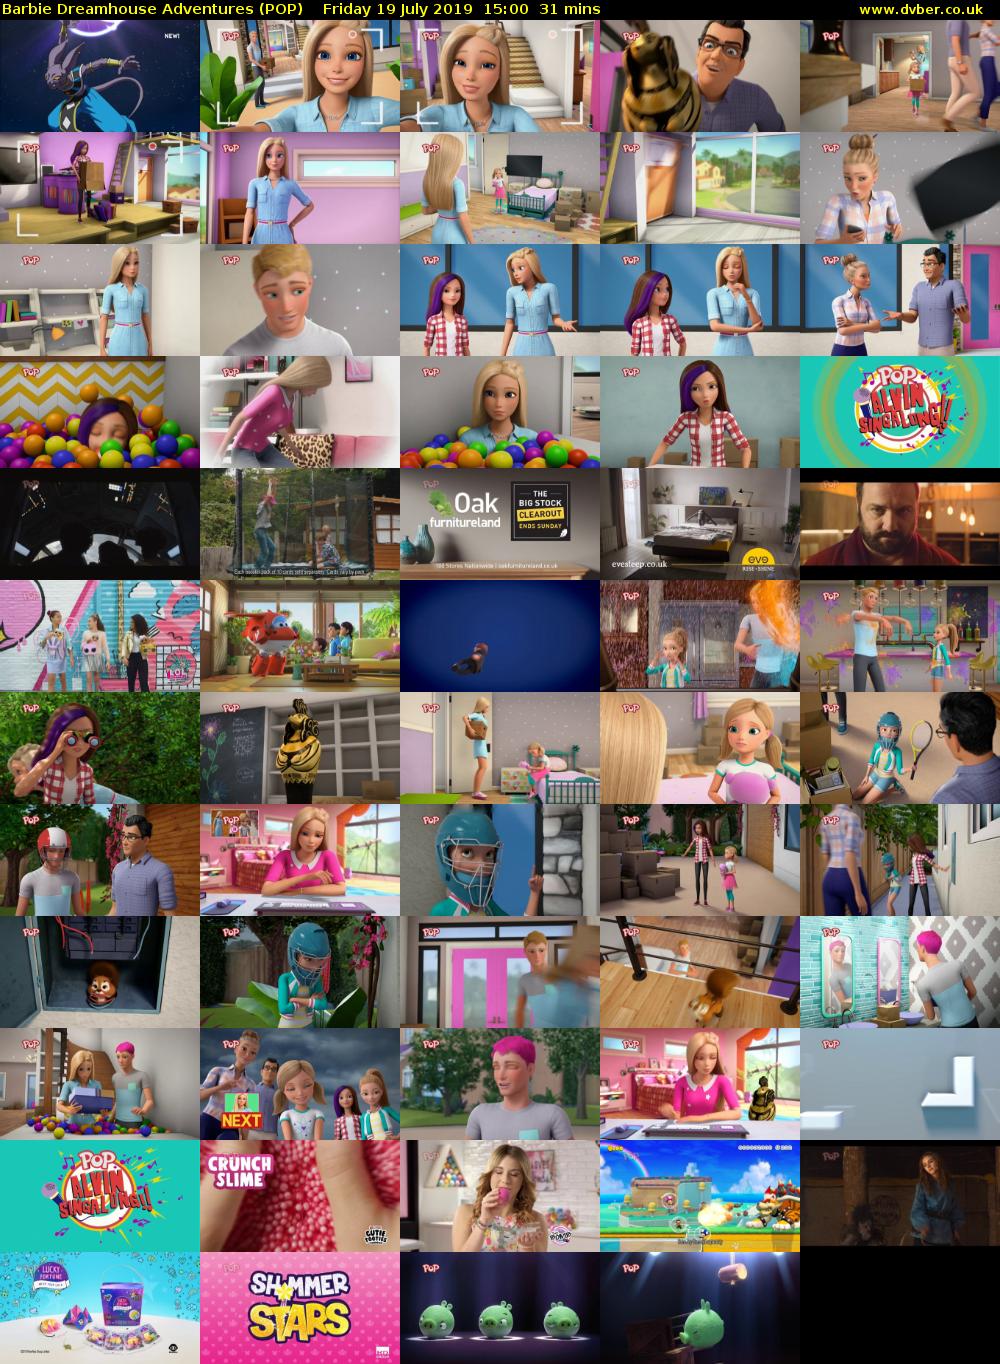 Barbie Dreamhouse Adventures (POP) Friday 19 July 2019 15:00 - 15:31